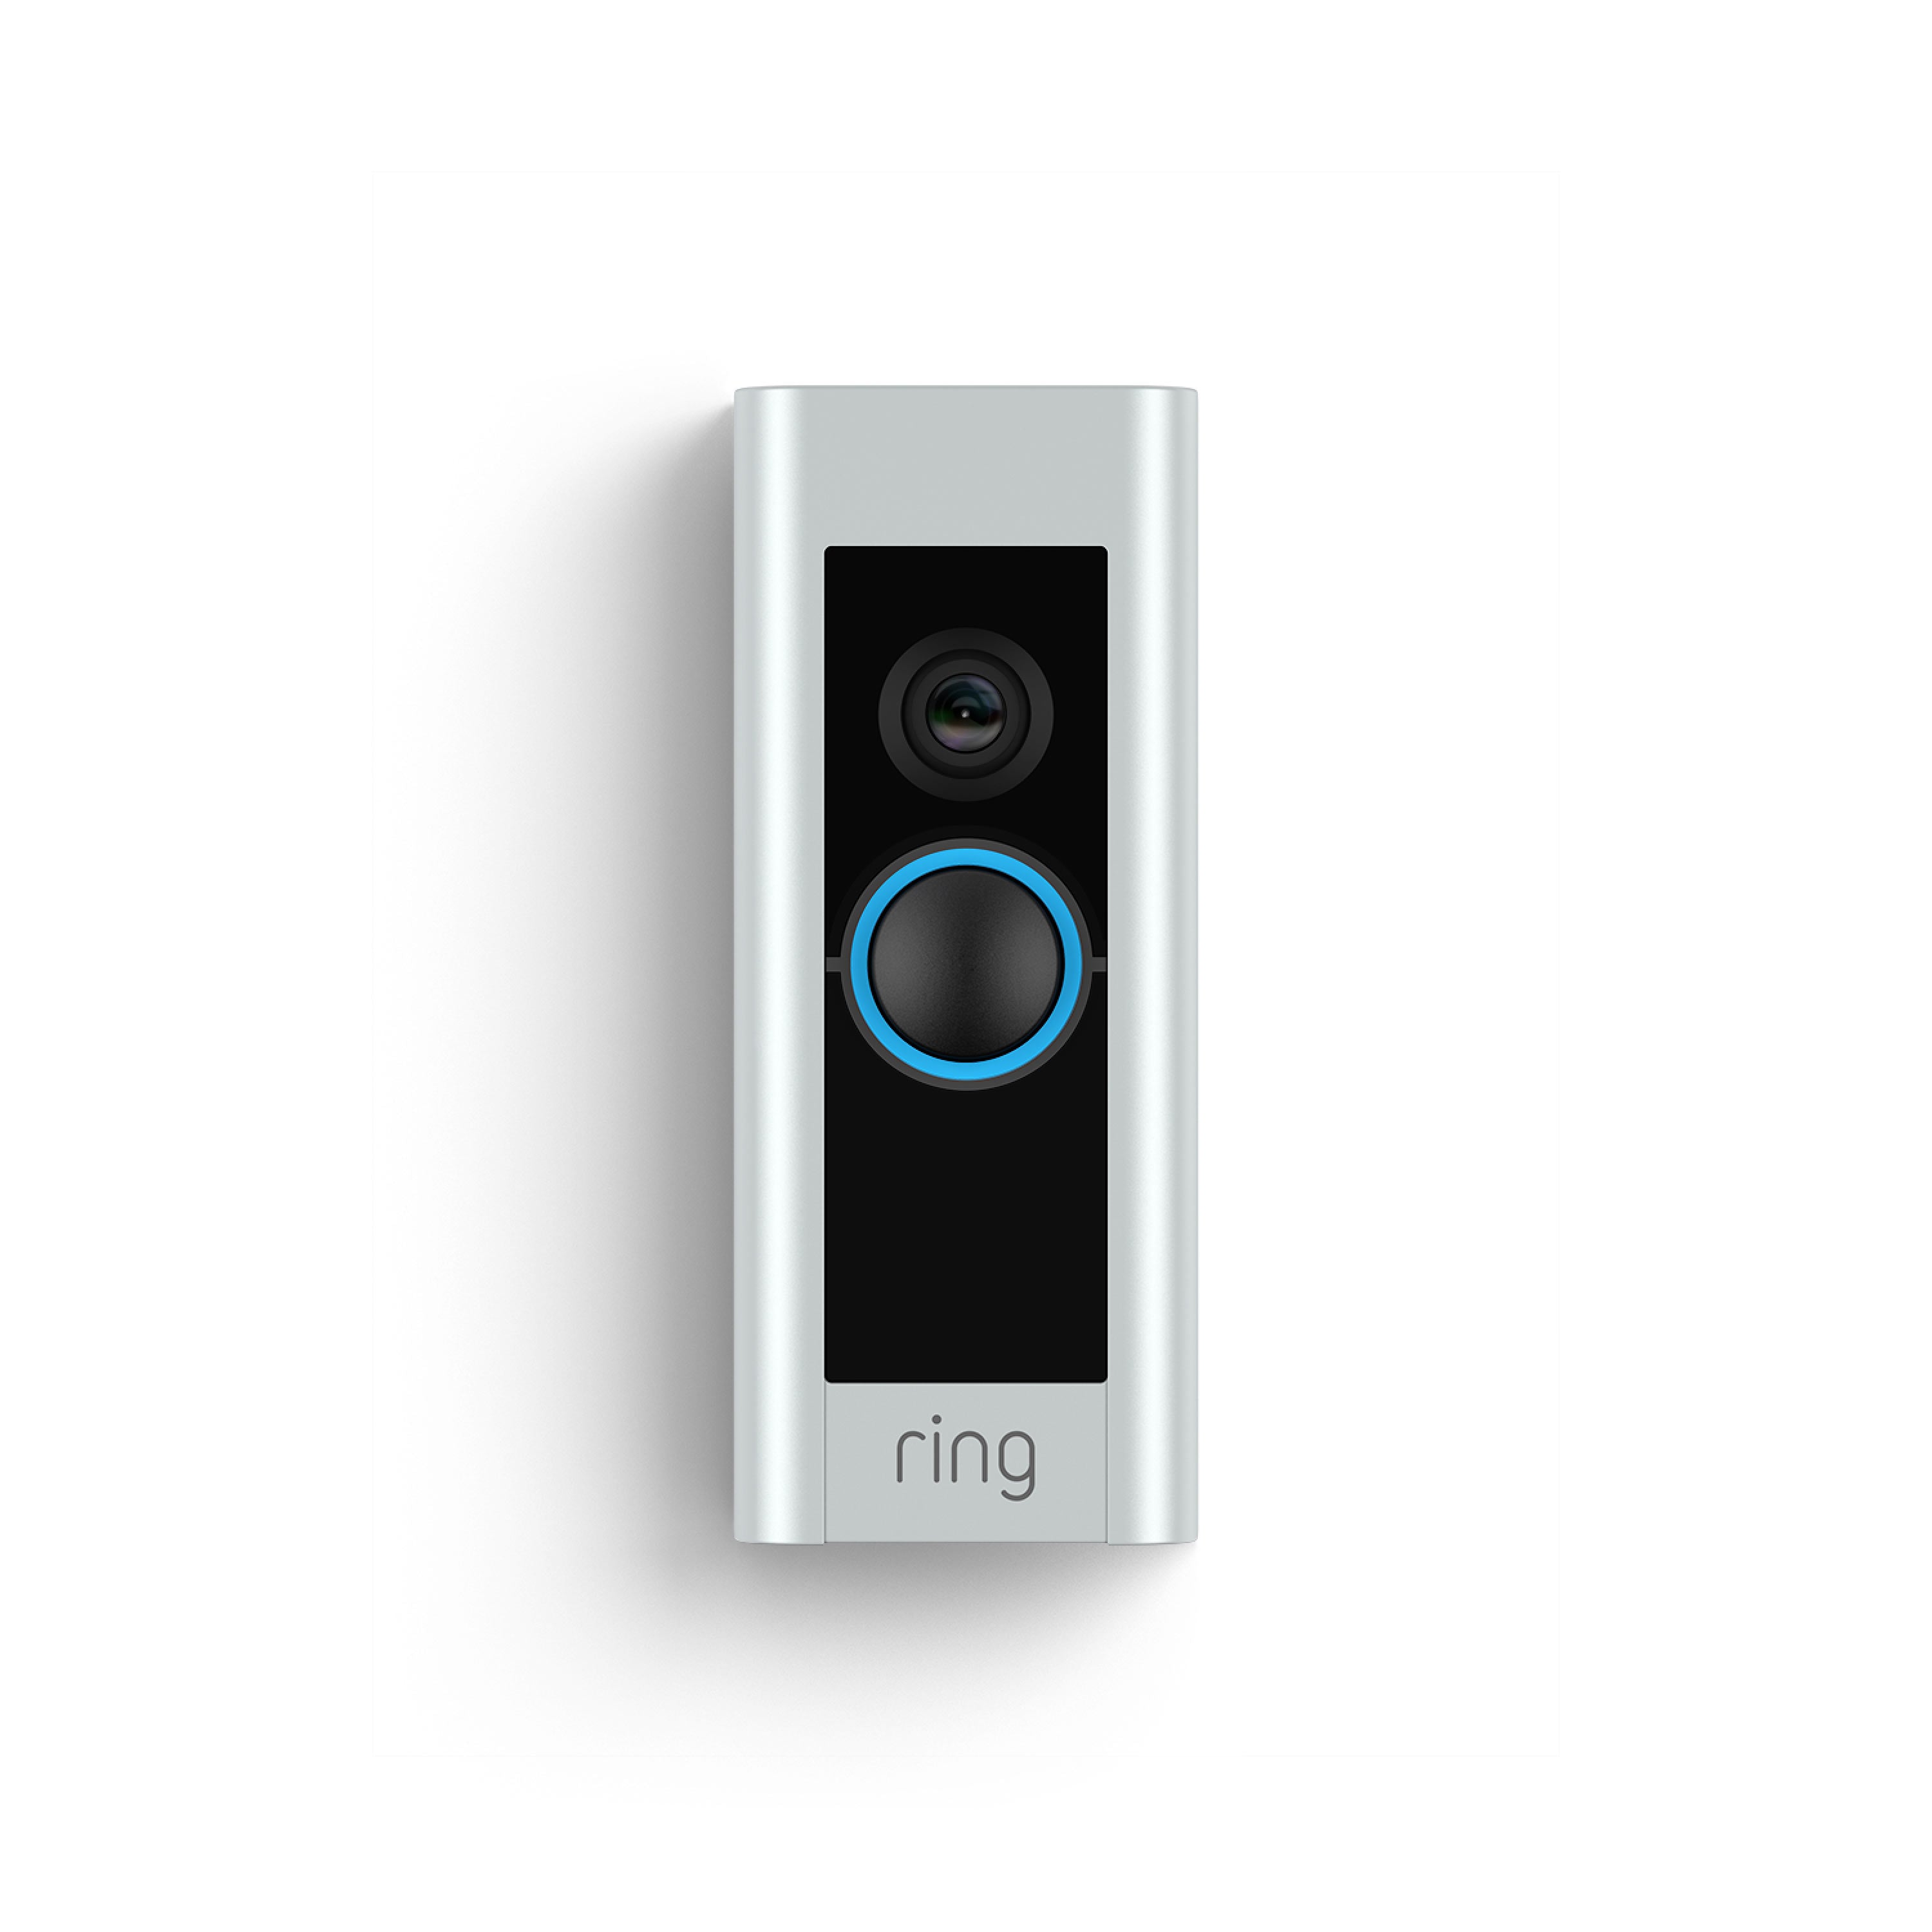 Ring Video Doorbell ProはAlexa、1080p HDビデオ、ナイトビジョン、ハードワイヤードで動作しますRing Video Doorbell Pro Works With Al